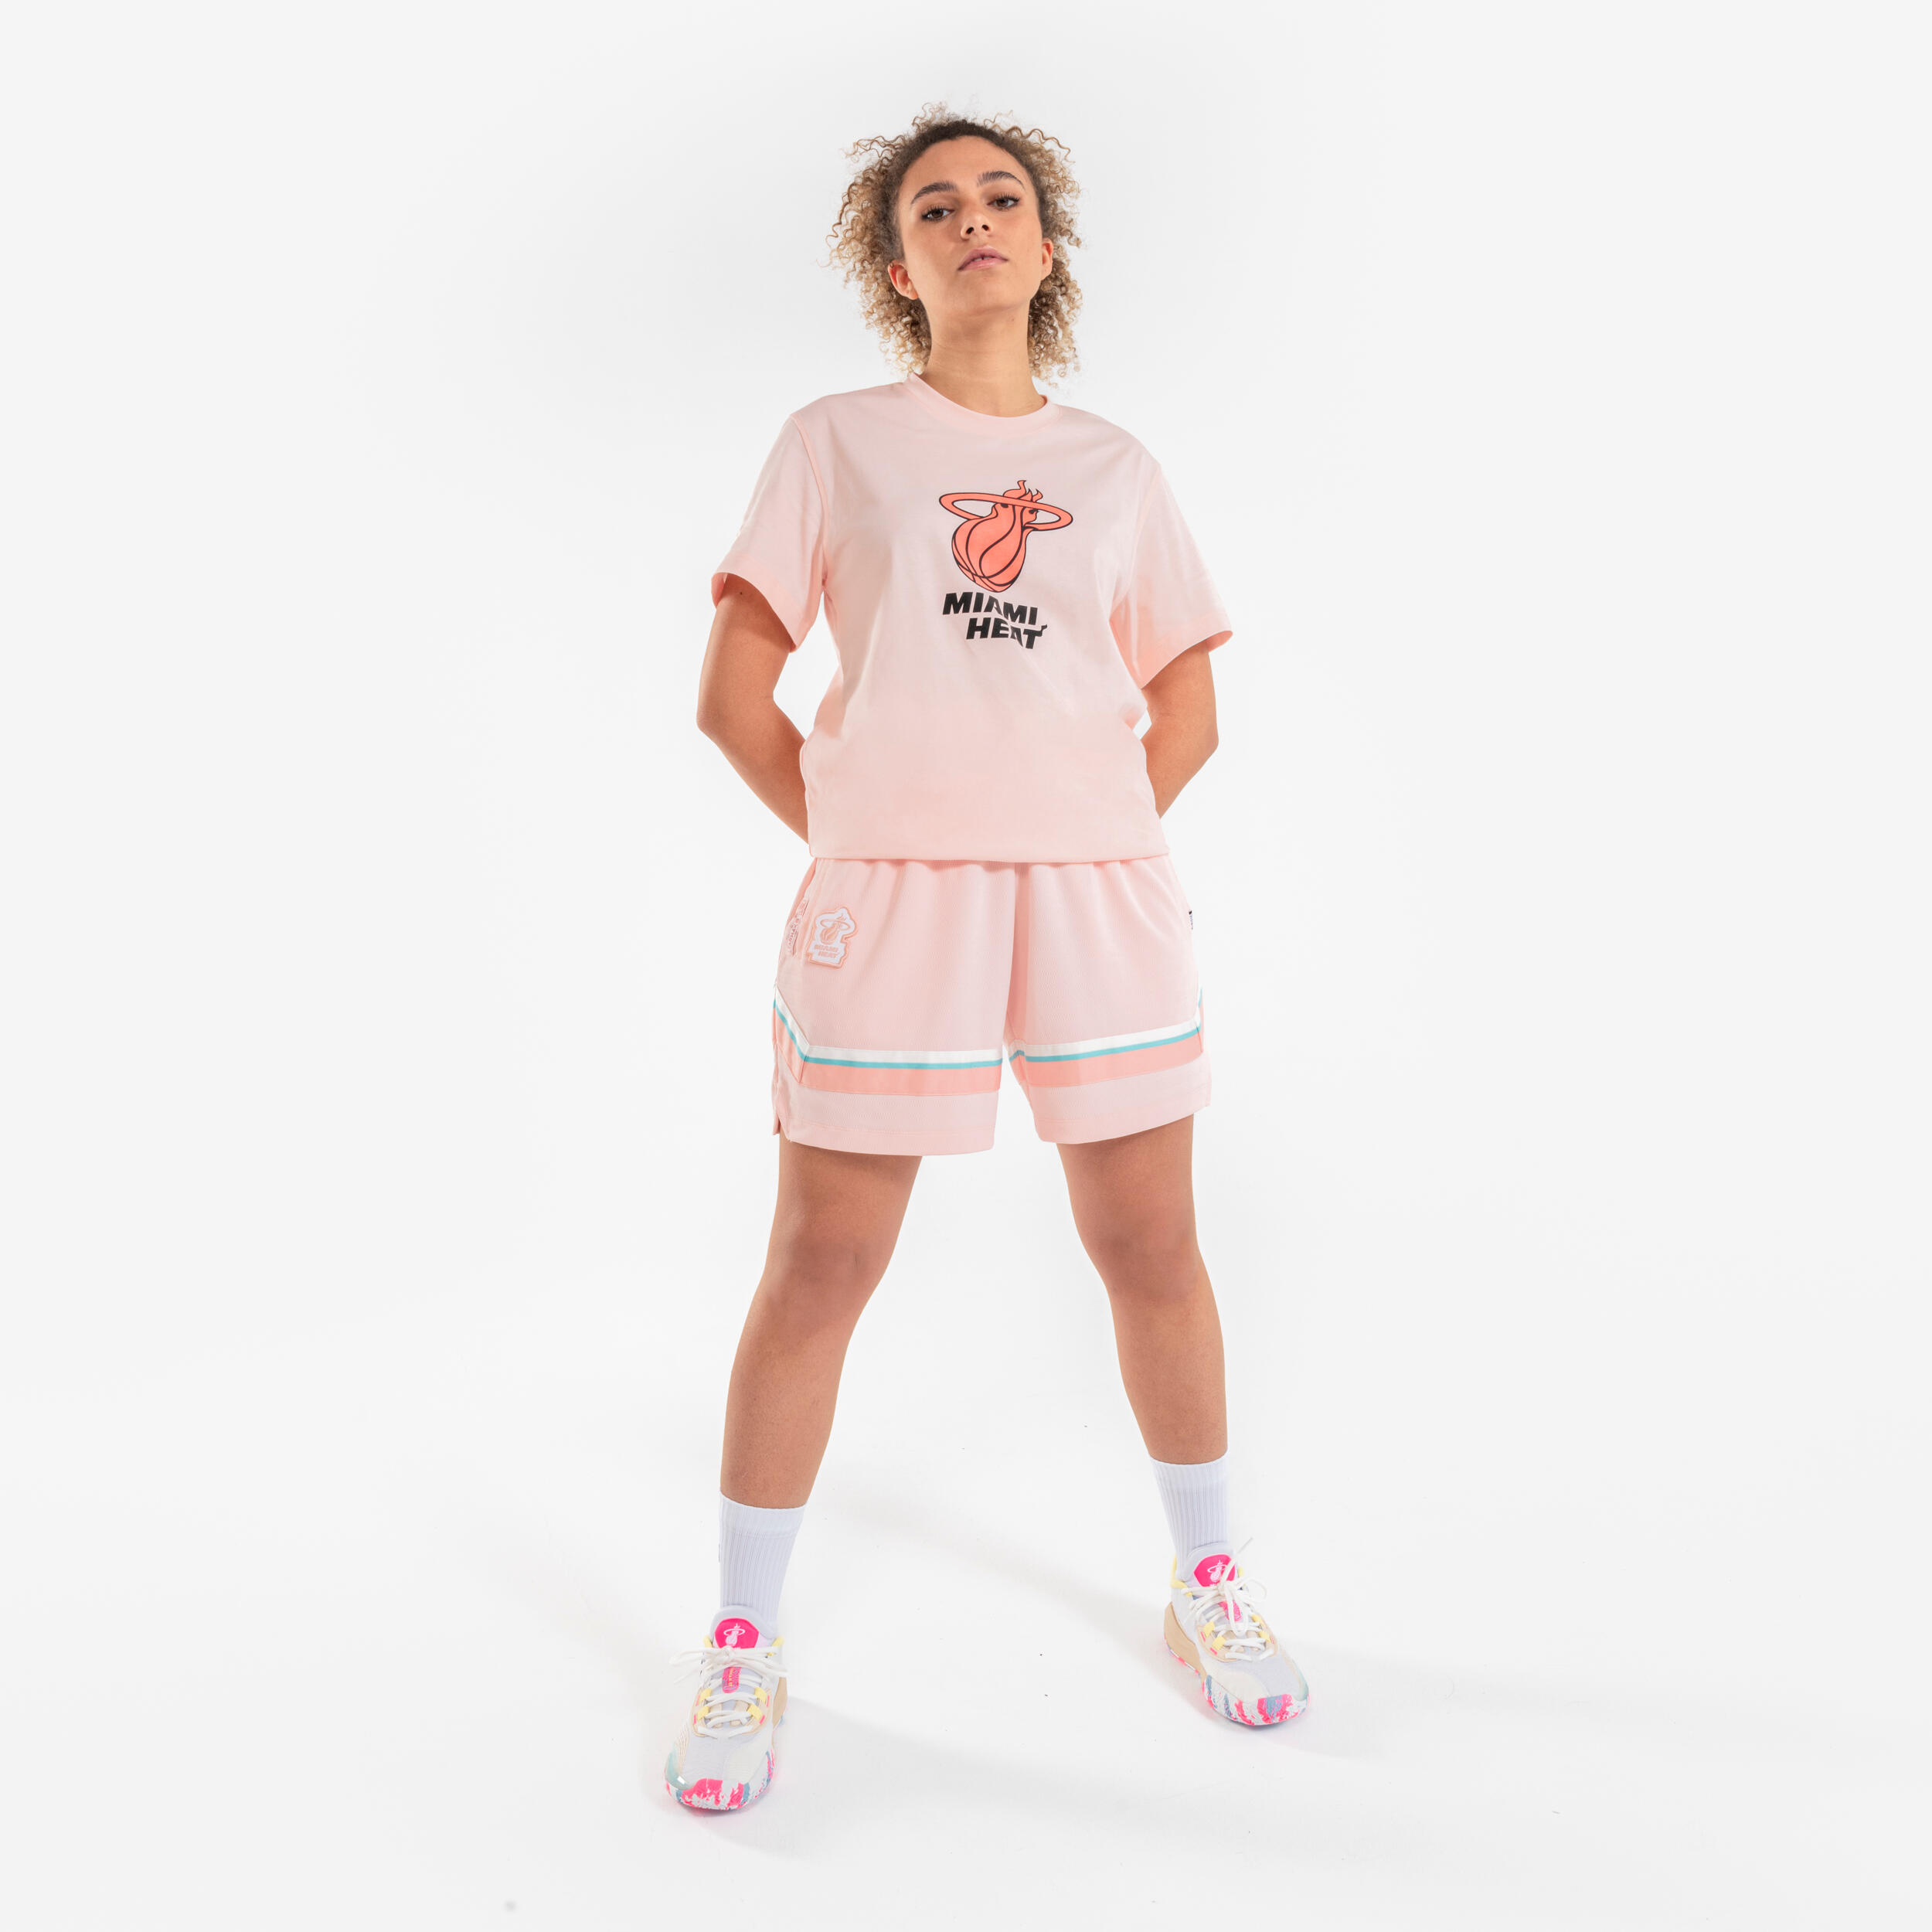 Unisex Basketball T-Shirt 900 AD - NBA Heat/Pink 5/6